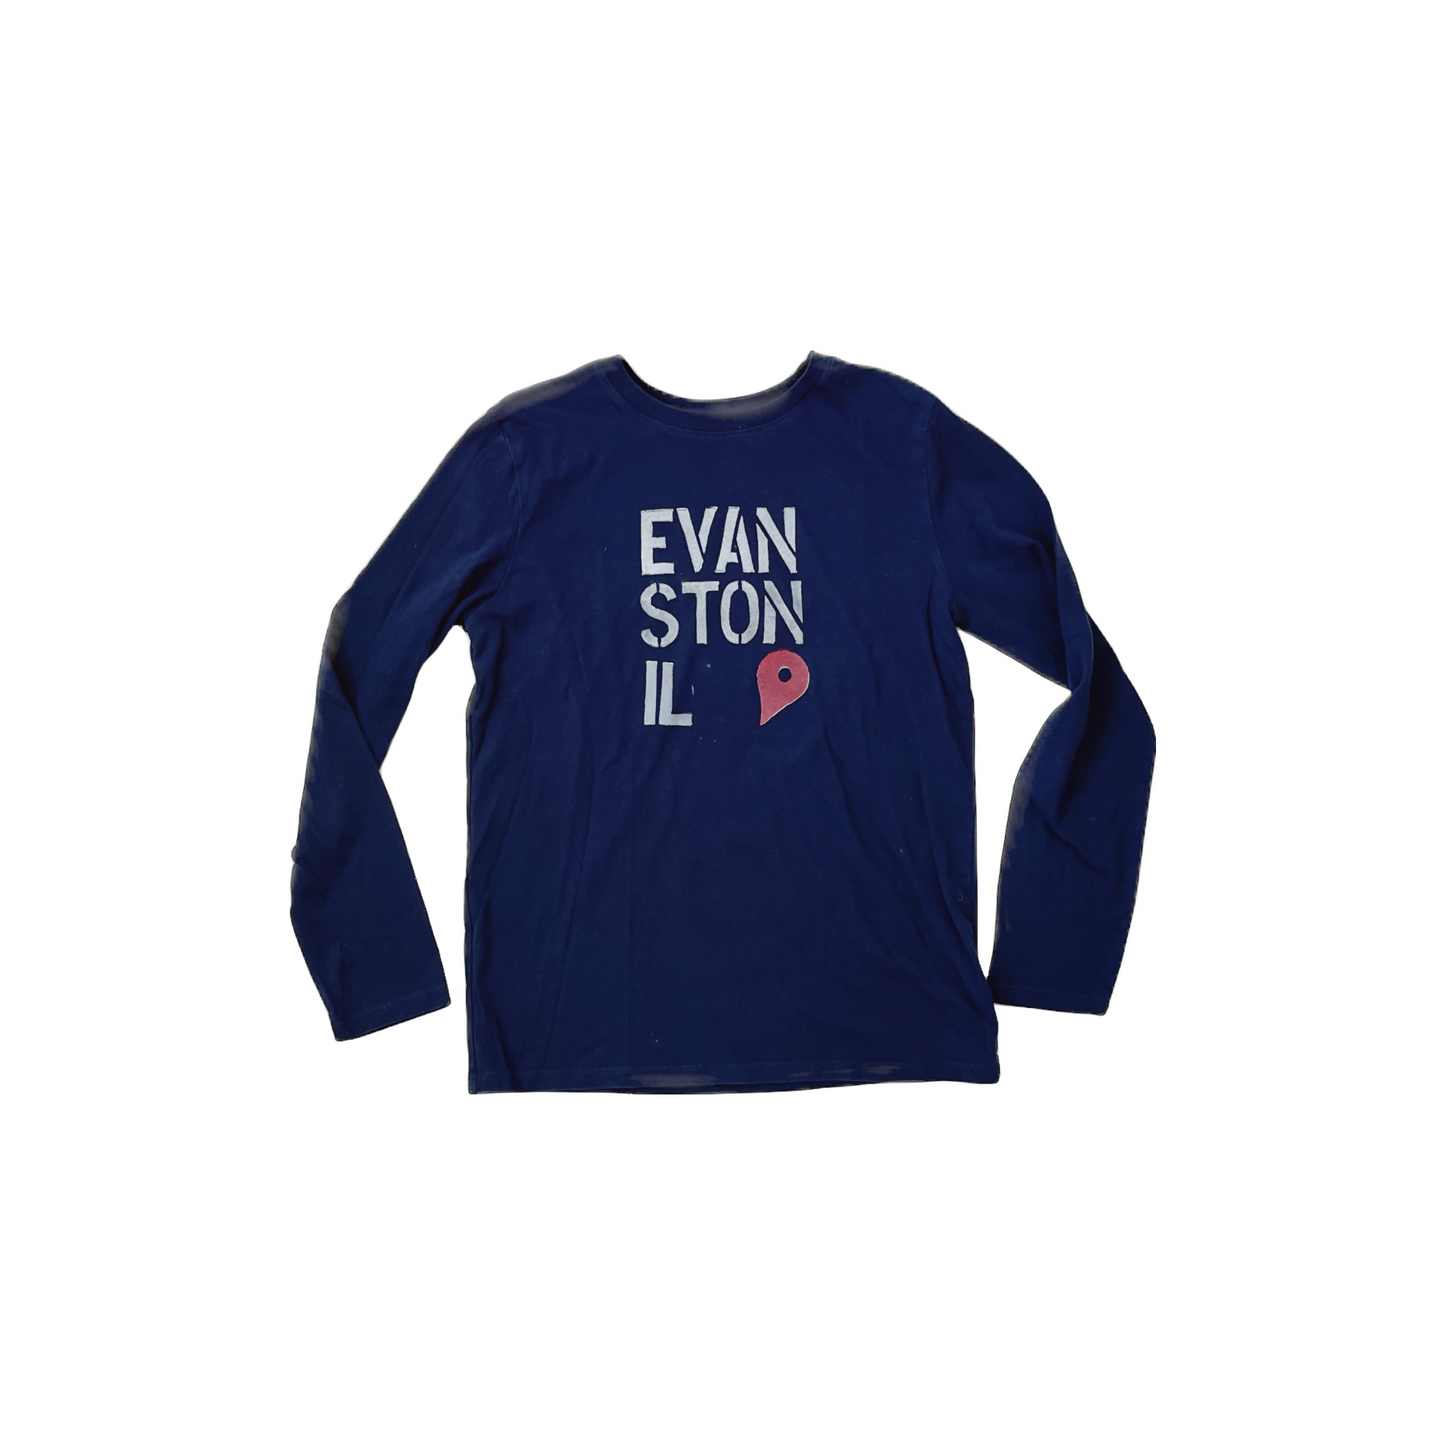 Evanston T-Shirt - Small (Kids 16)